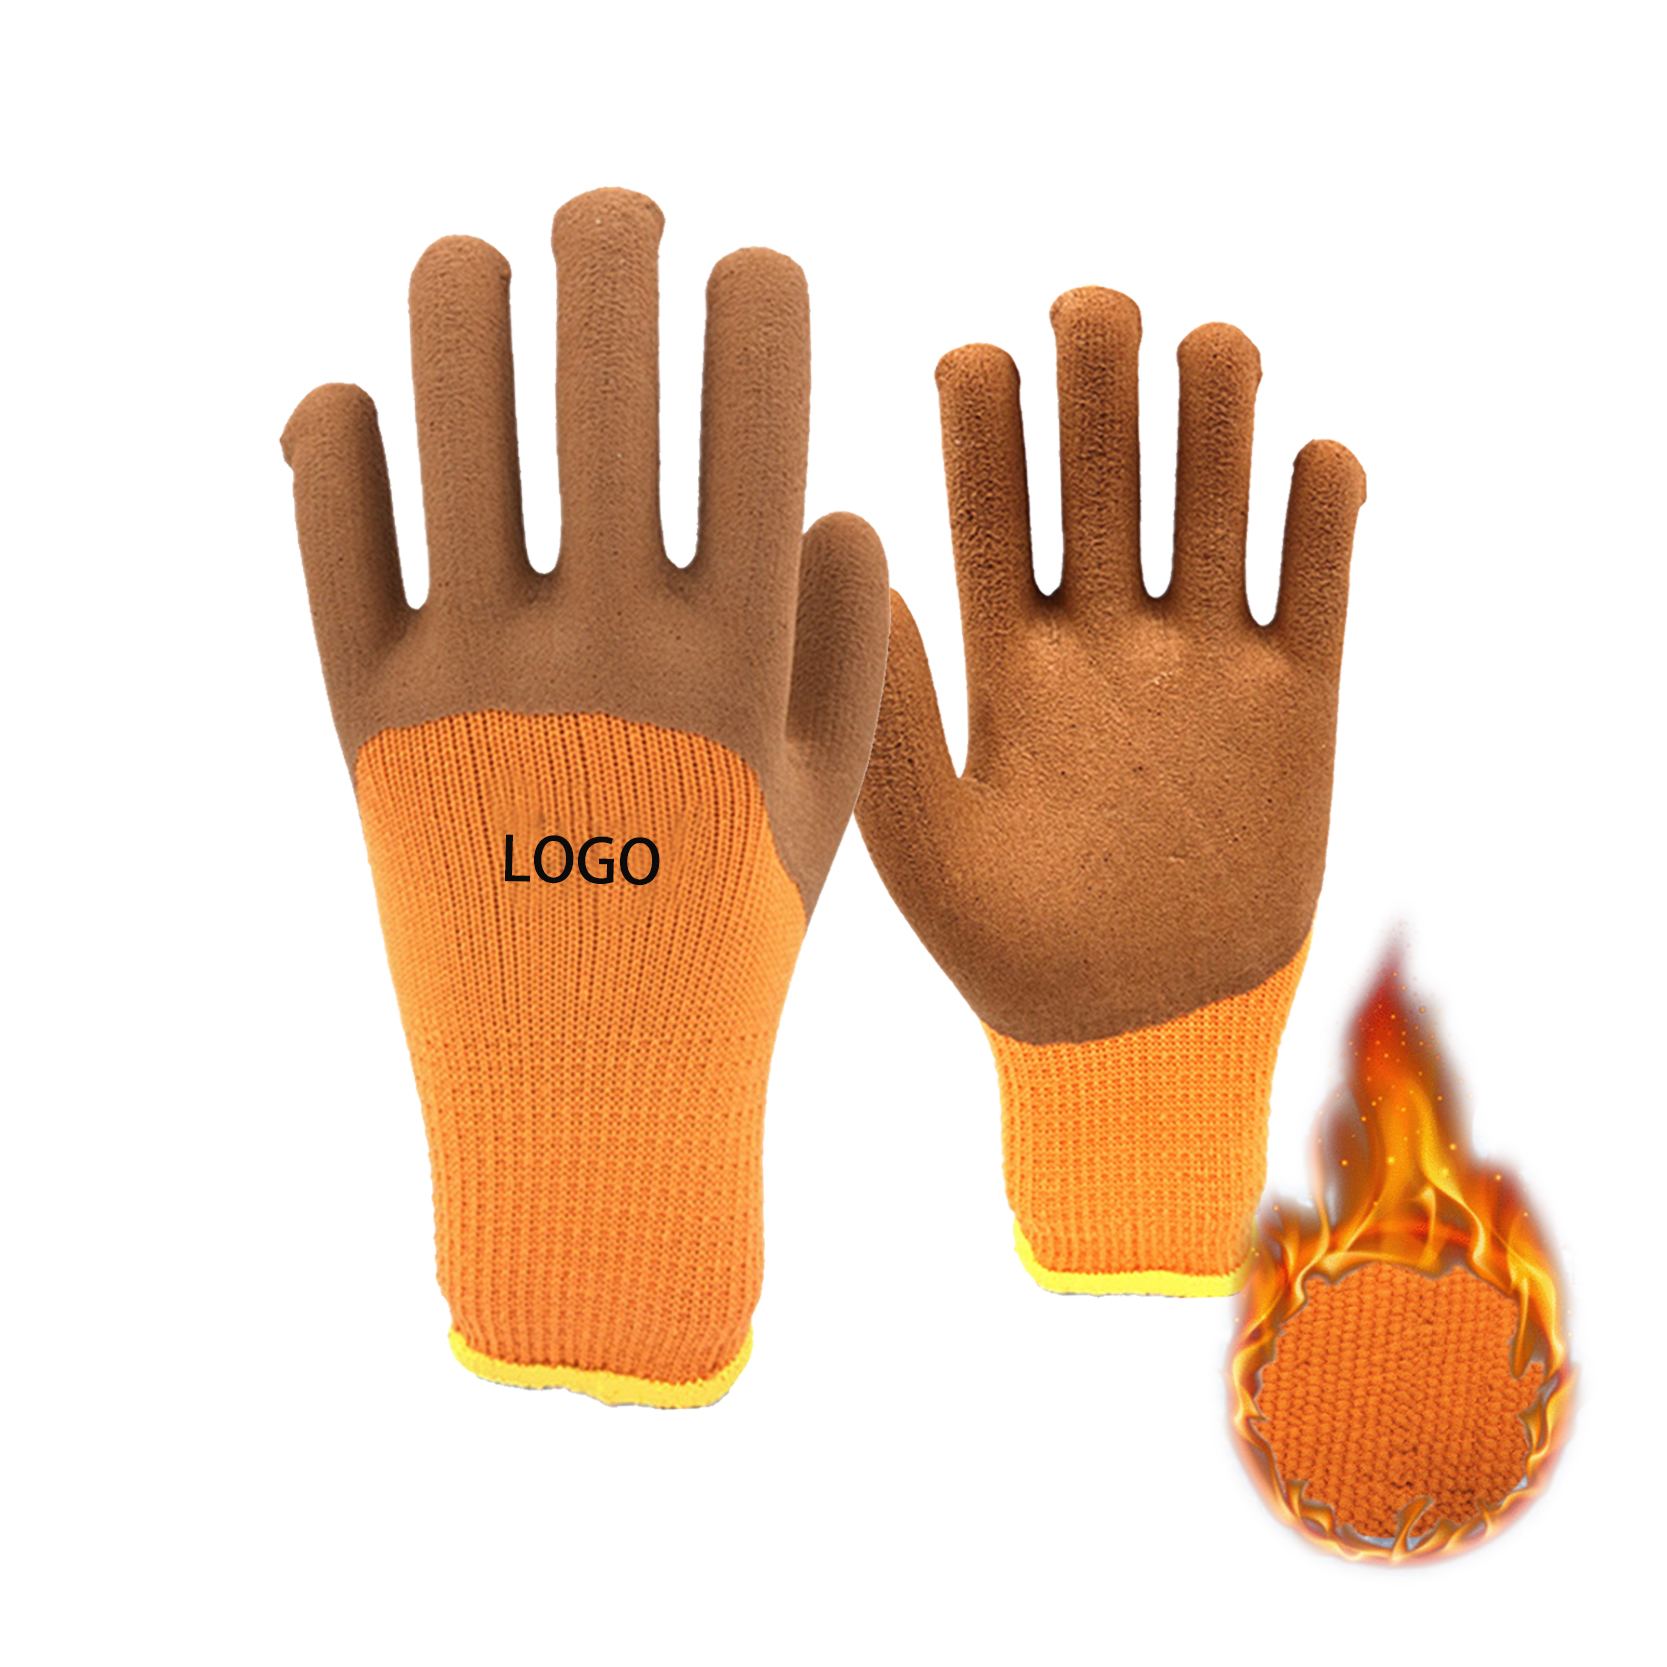 Good Quality Latex Coated Work Gloves, Premium, Medium